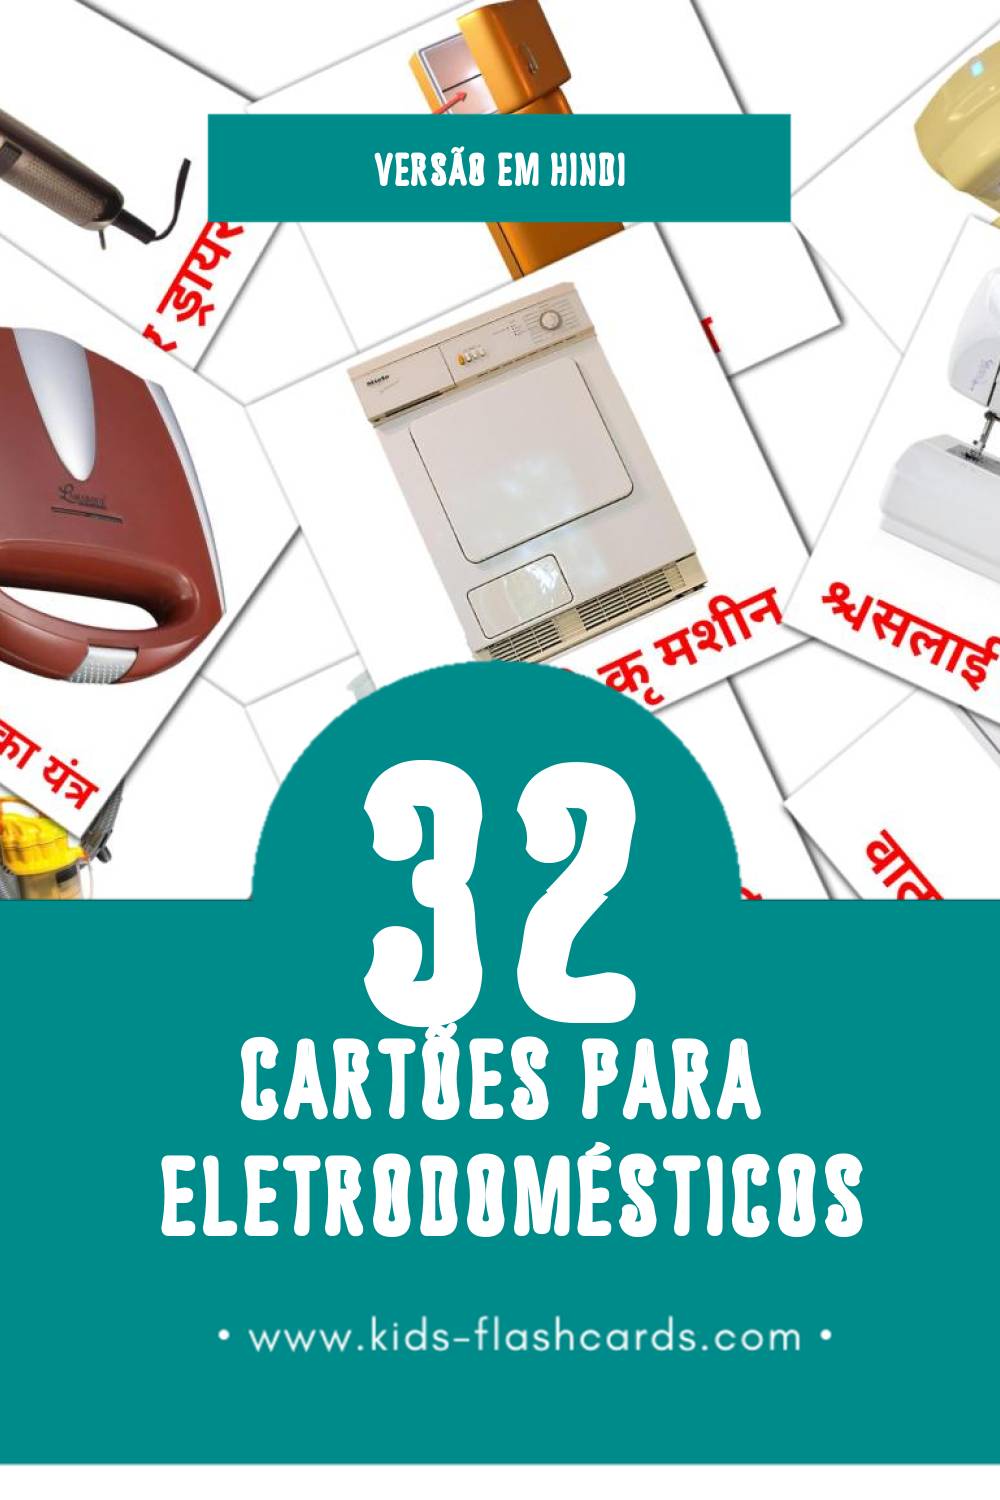 Flashcards de घरेलू उपकरण Visuais para Toddlers (32 cartões em Hindi)